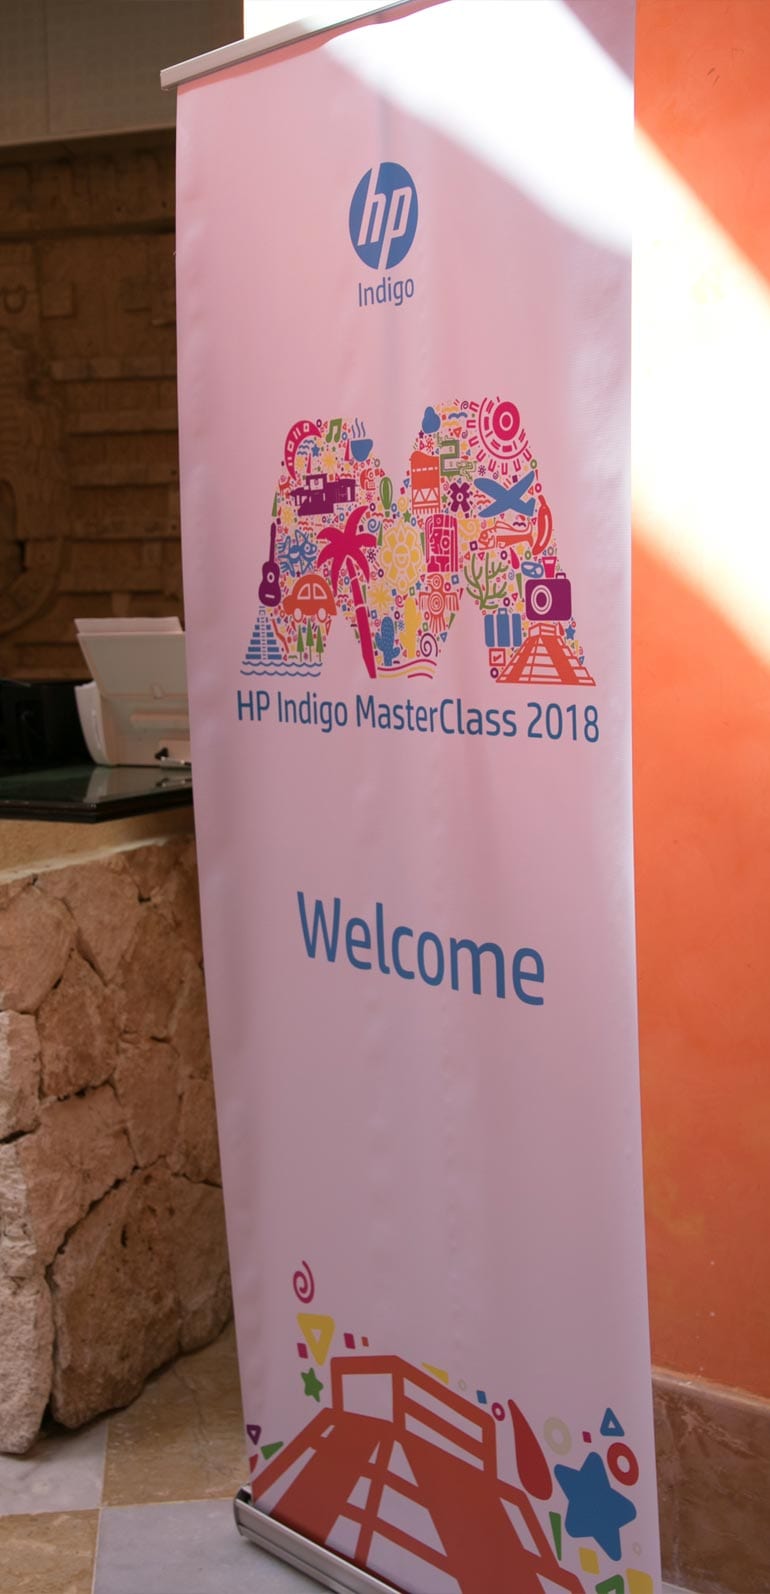 SATmexico dmc meetings events mexico cancun conference welcome banner branding hp indigo masterclass